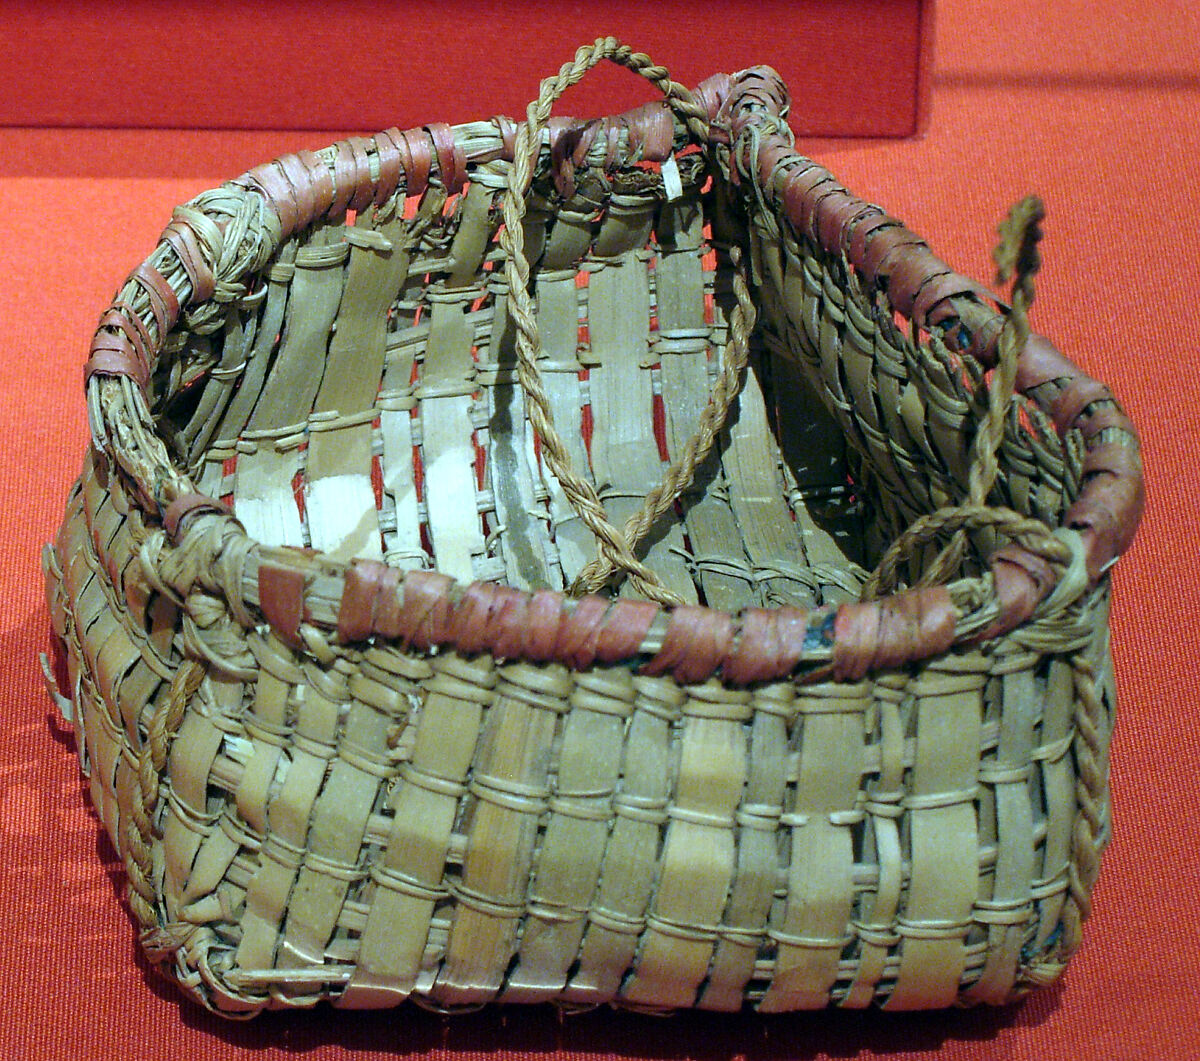 Basket, Palm leaves, grass, string, red dye 